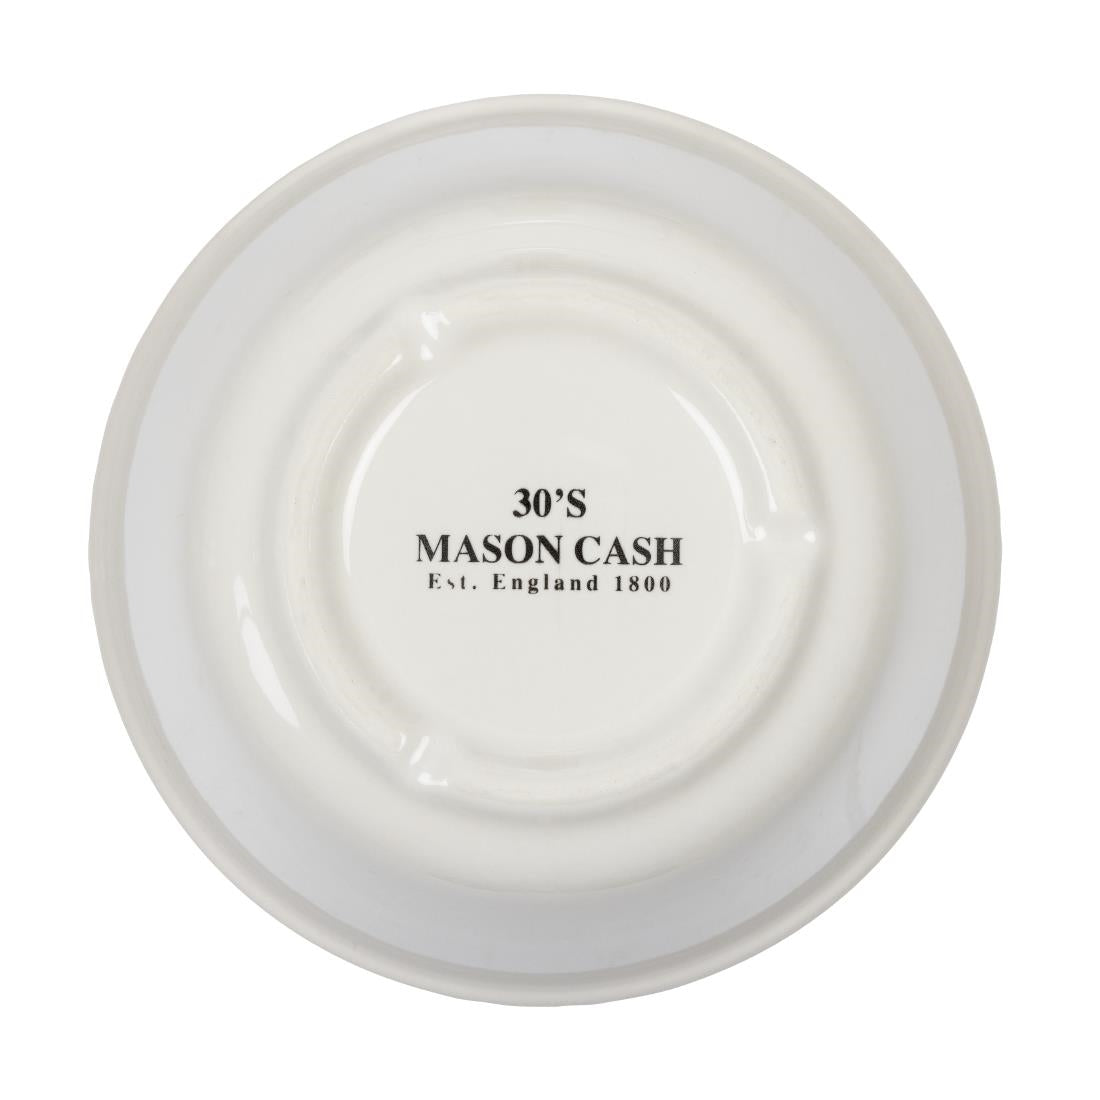 GG772 Mason Cash Pudding Basin 1000ml JD Catering Equipment Solutions Ltd